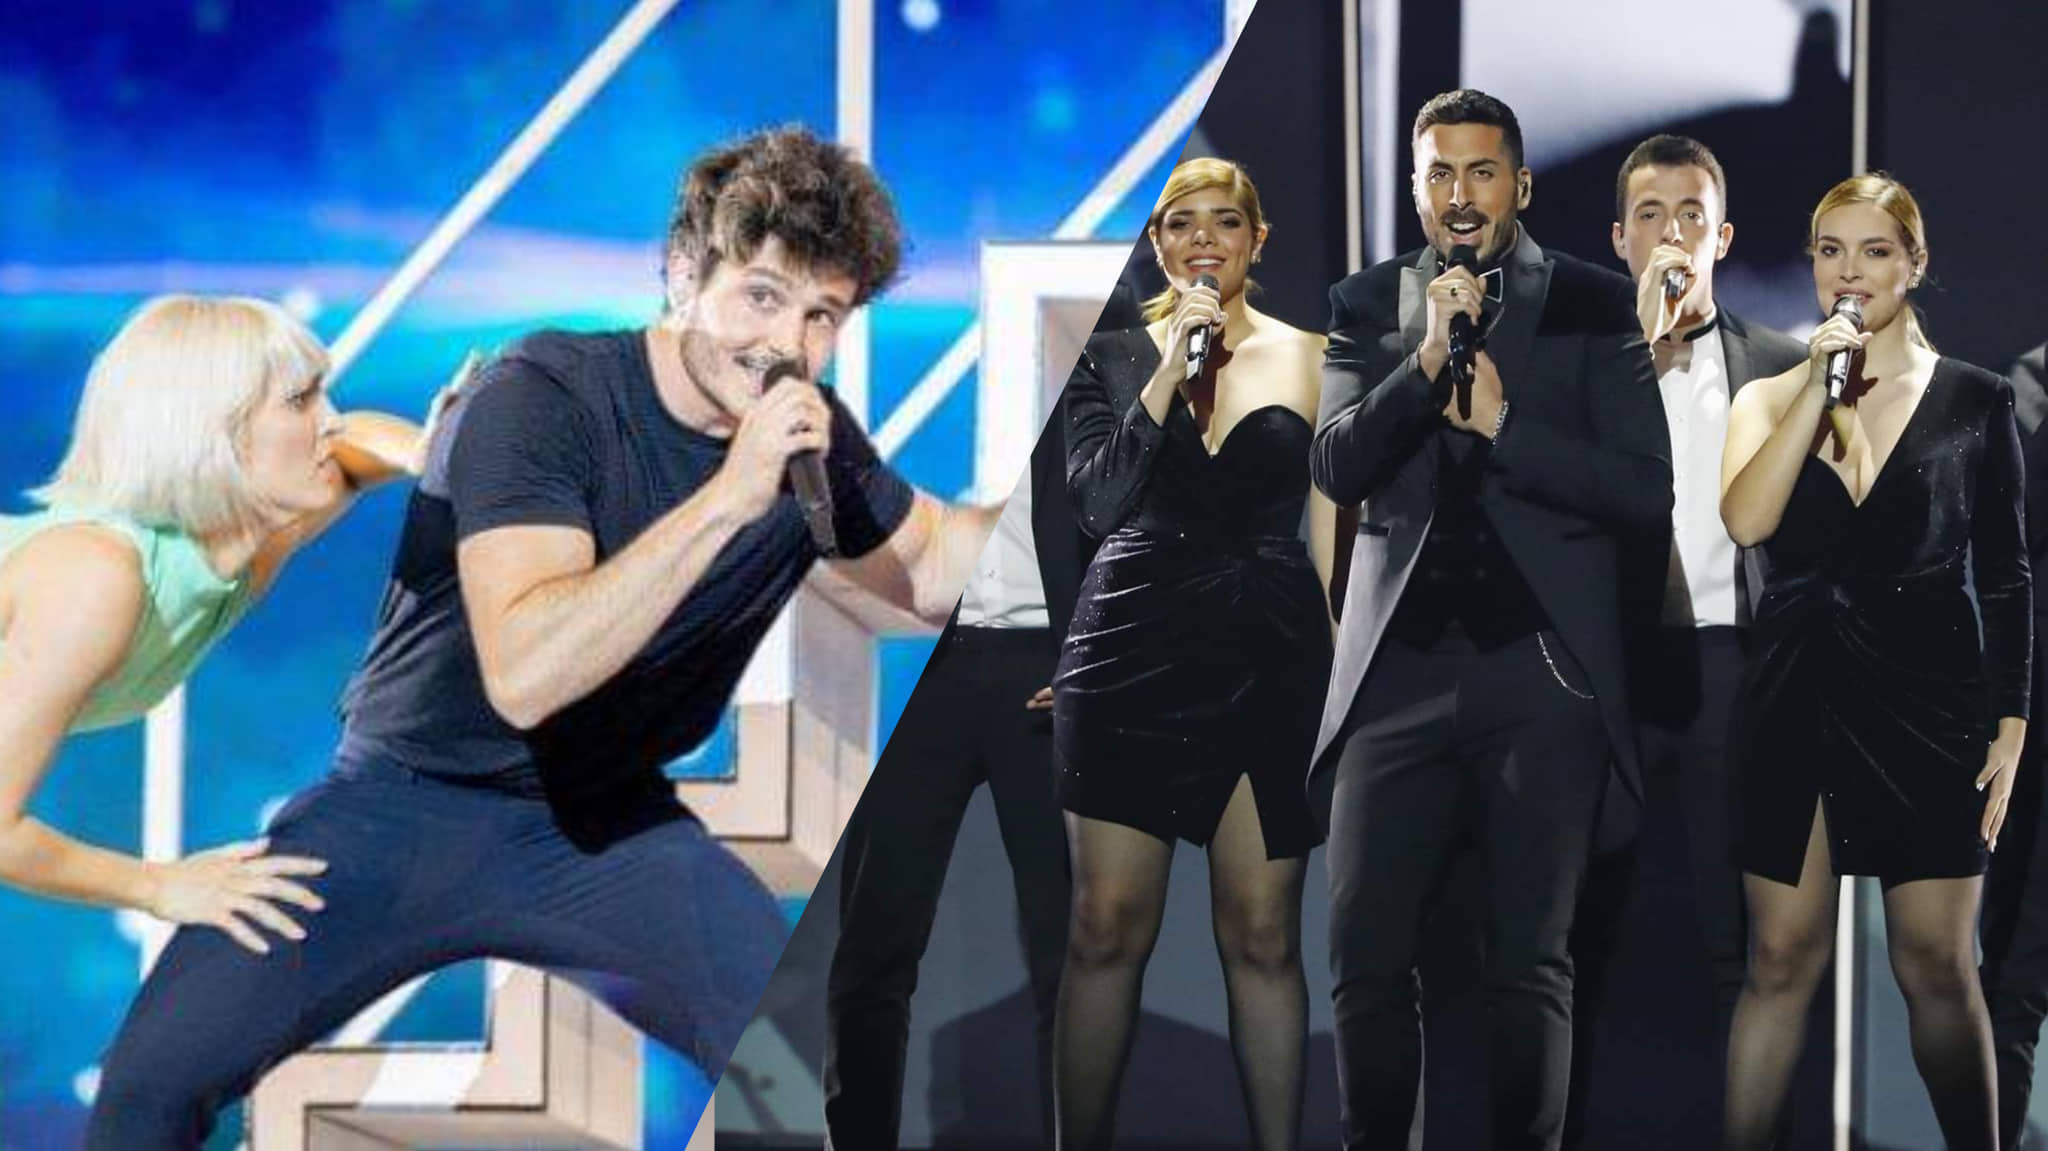 Eurovision 2020: Ισπανία και Ισραήλ θα δώσουν το παρών στην Ολλανδία